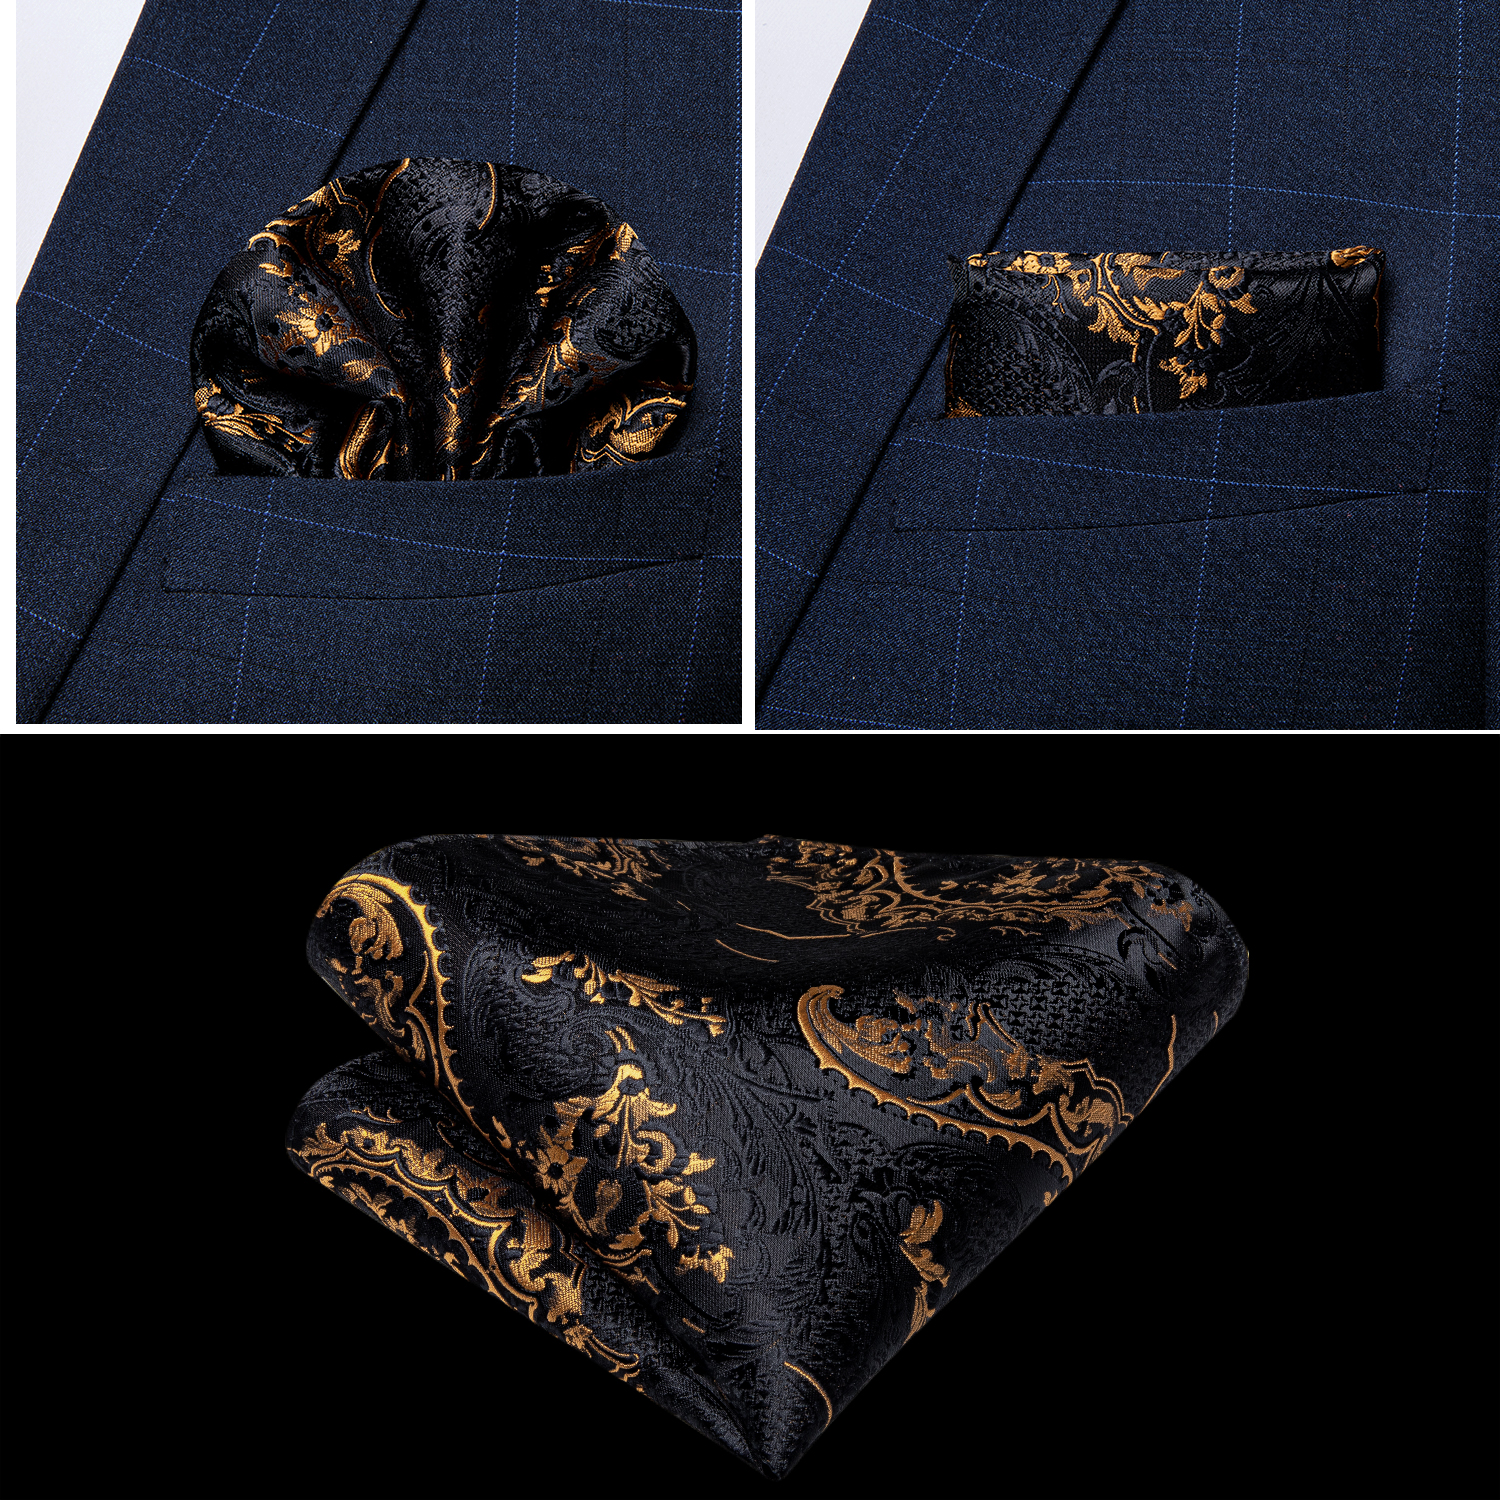 2020 New Fashion Men's Suit Vest Gold Paisley Black Silk Waistcoat Sleeveless Formal Business Jacket Dress Vests For Men DiBanGu